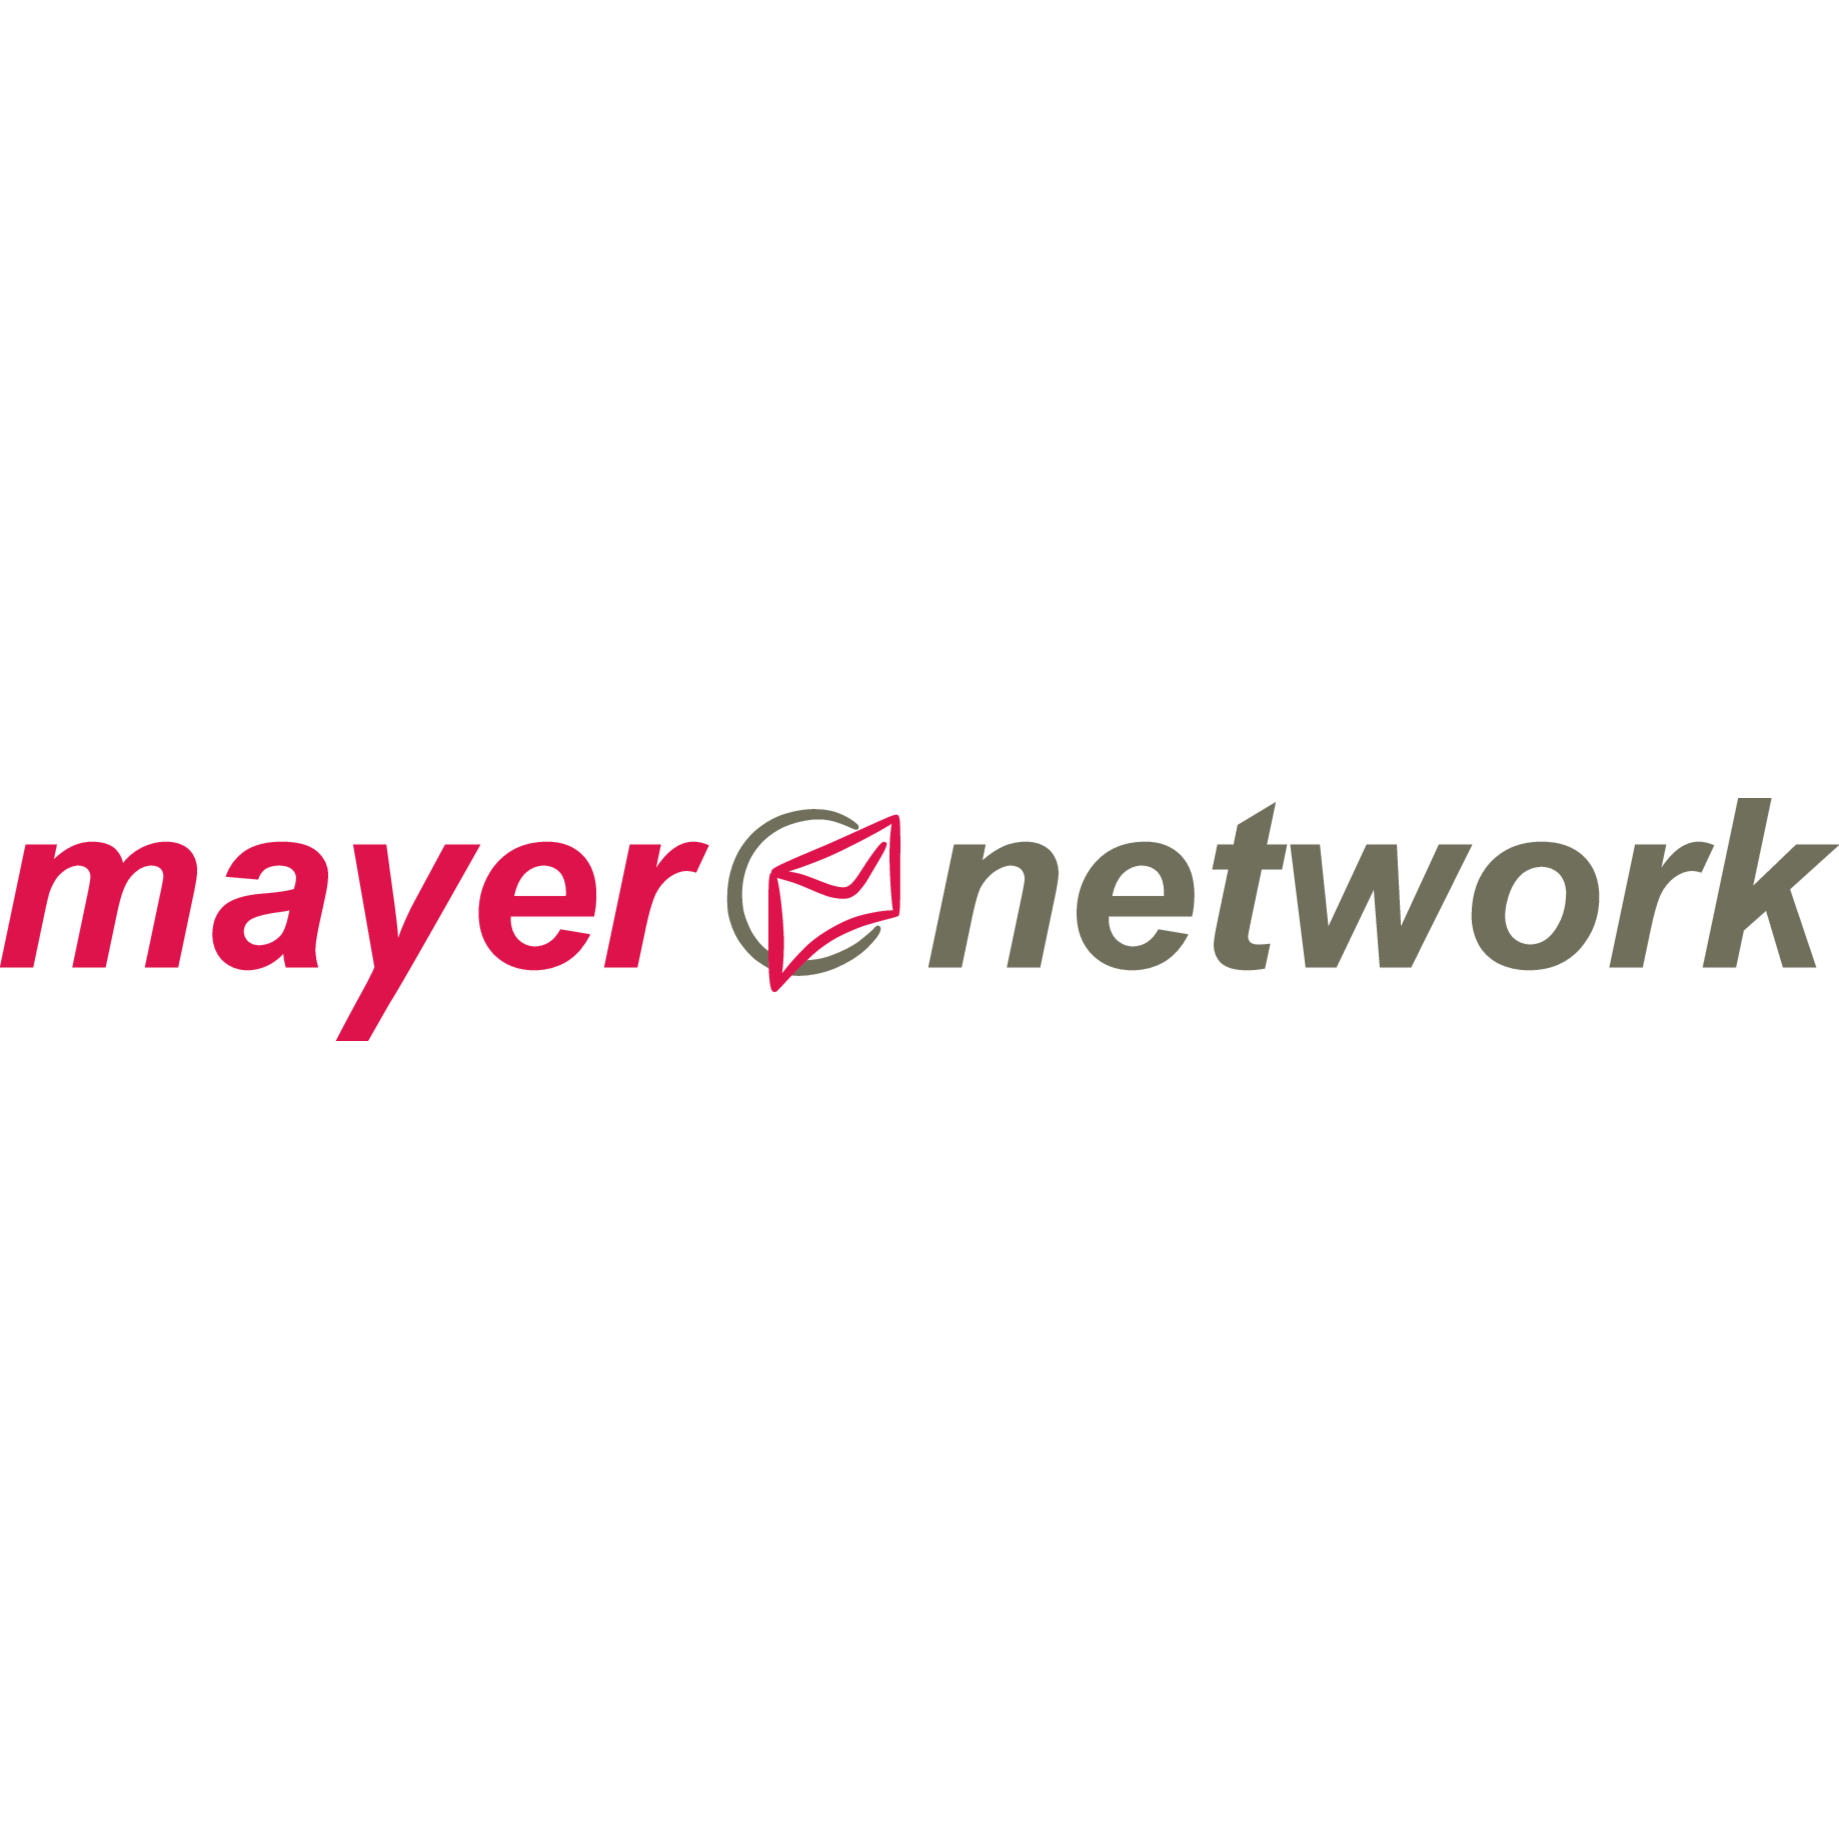 mayer network